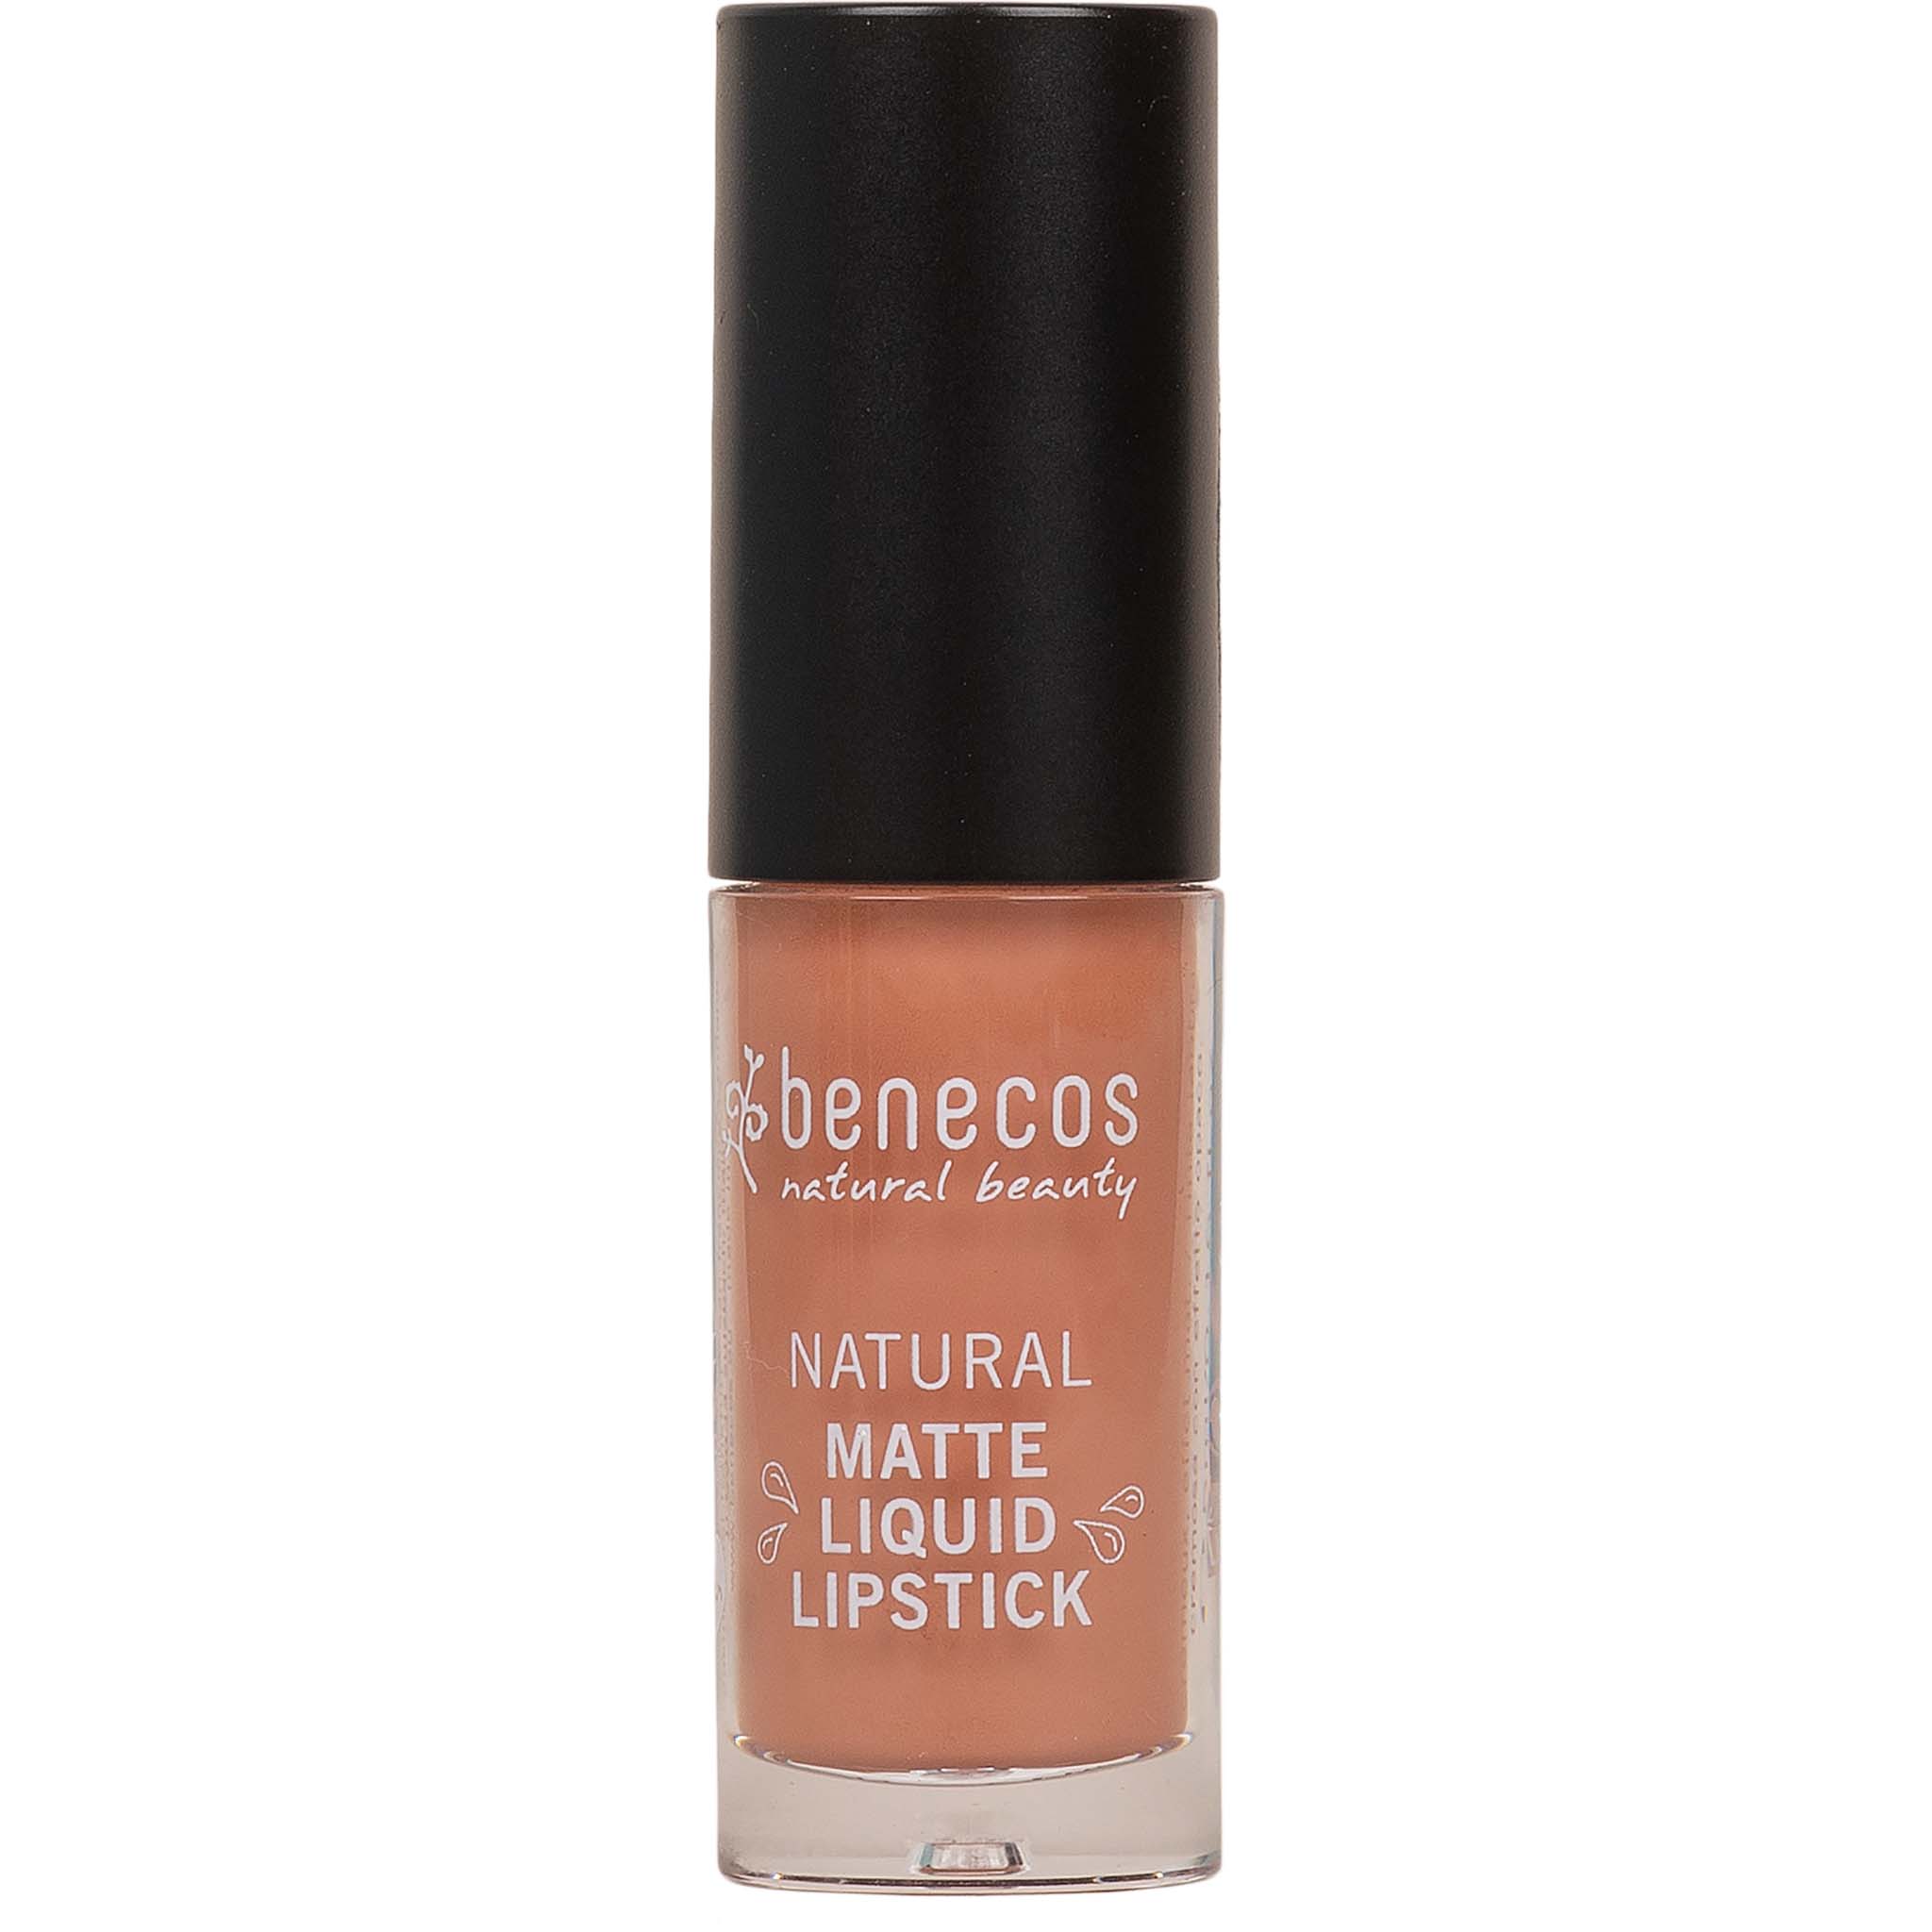 Natural Matte Liquid Lipstick - mypure.co.uk